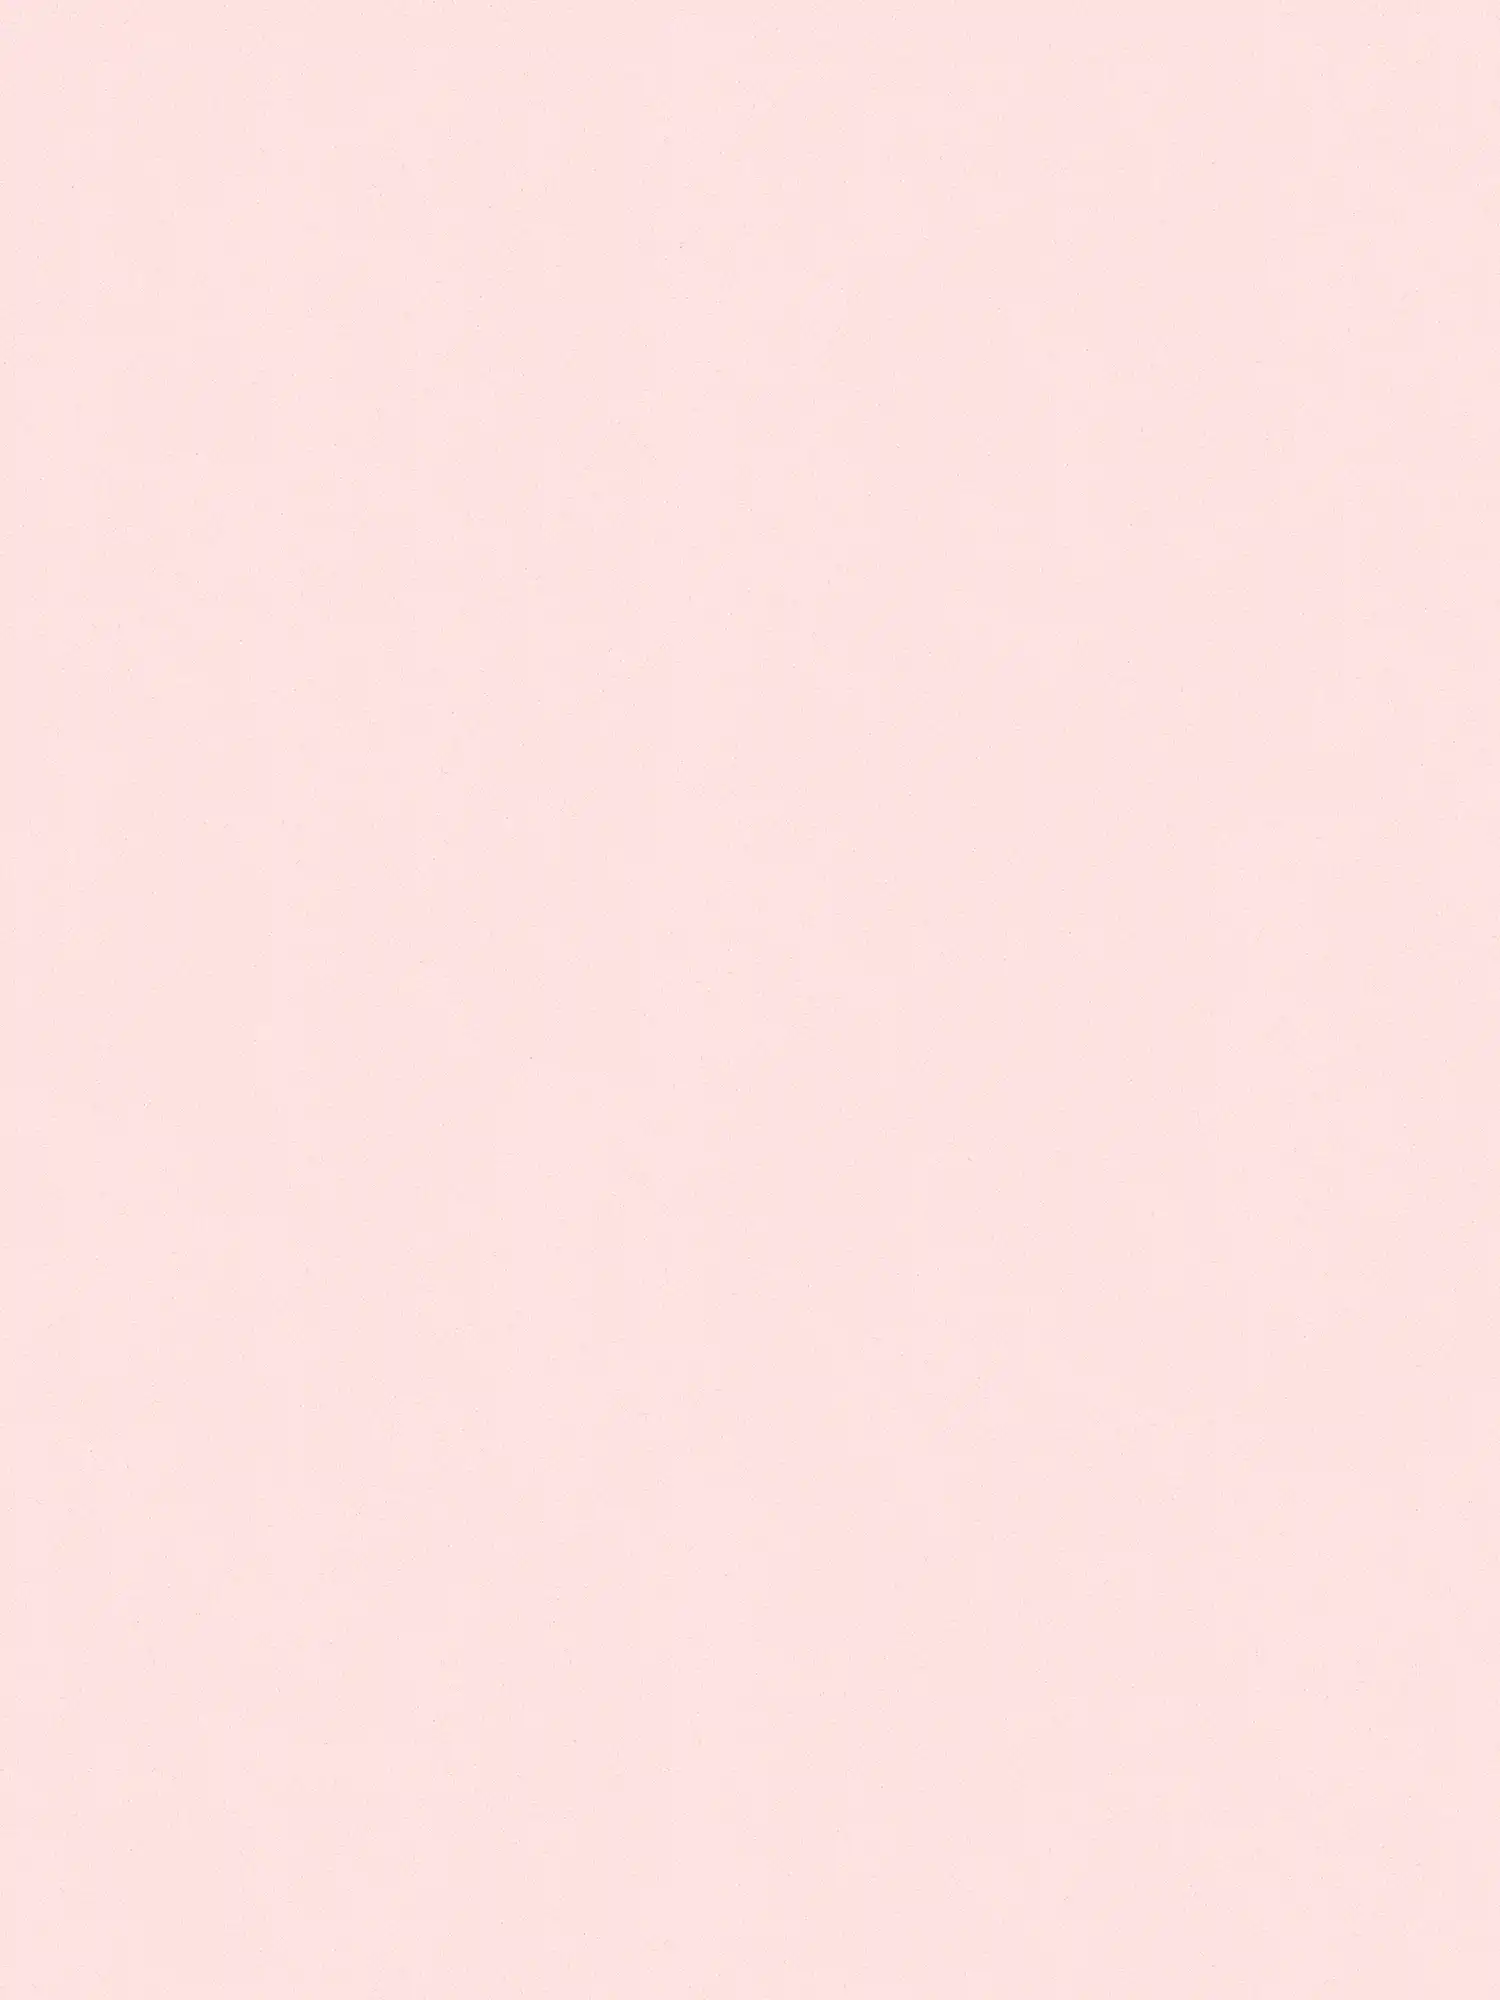 Plain wallpaper warm colour, textured - pink
